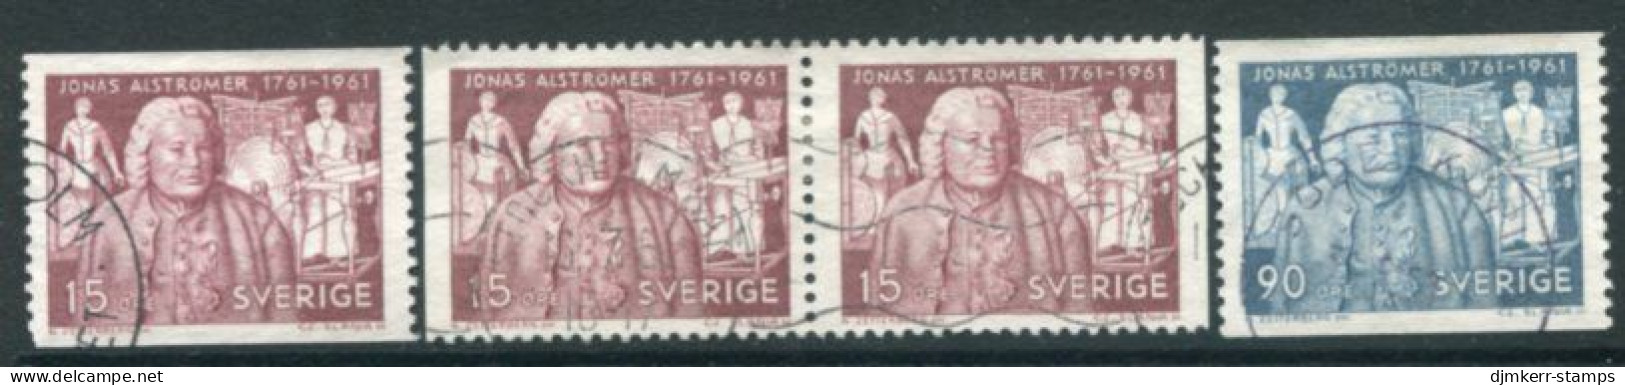 SWEDEN 1961 Alströmer Bicentenary Used.  Michel 473-74 - Gebruikt